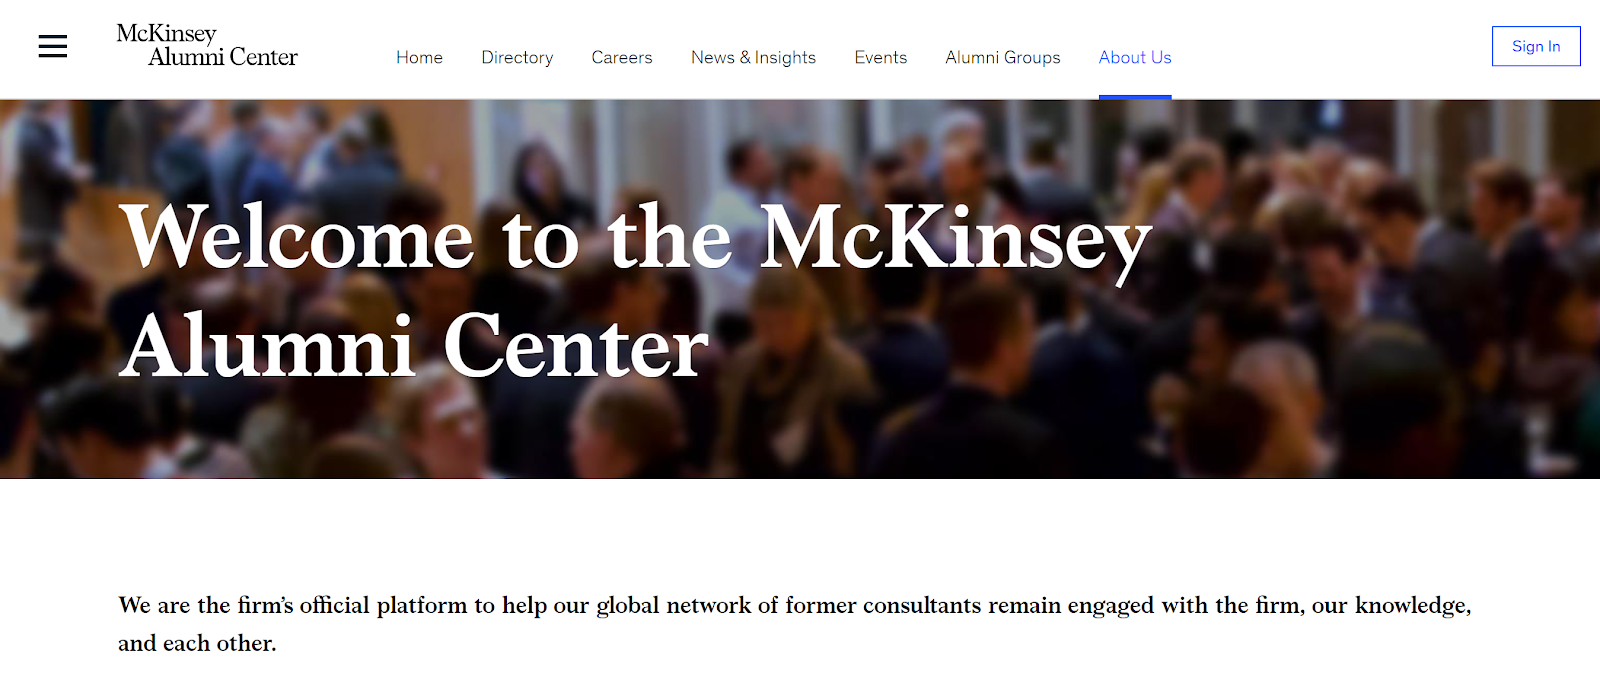 McKinsey's page for The McKinsey Alumni Center.